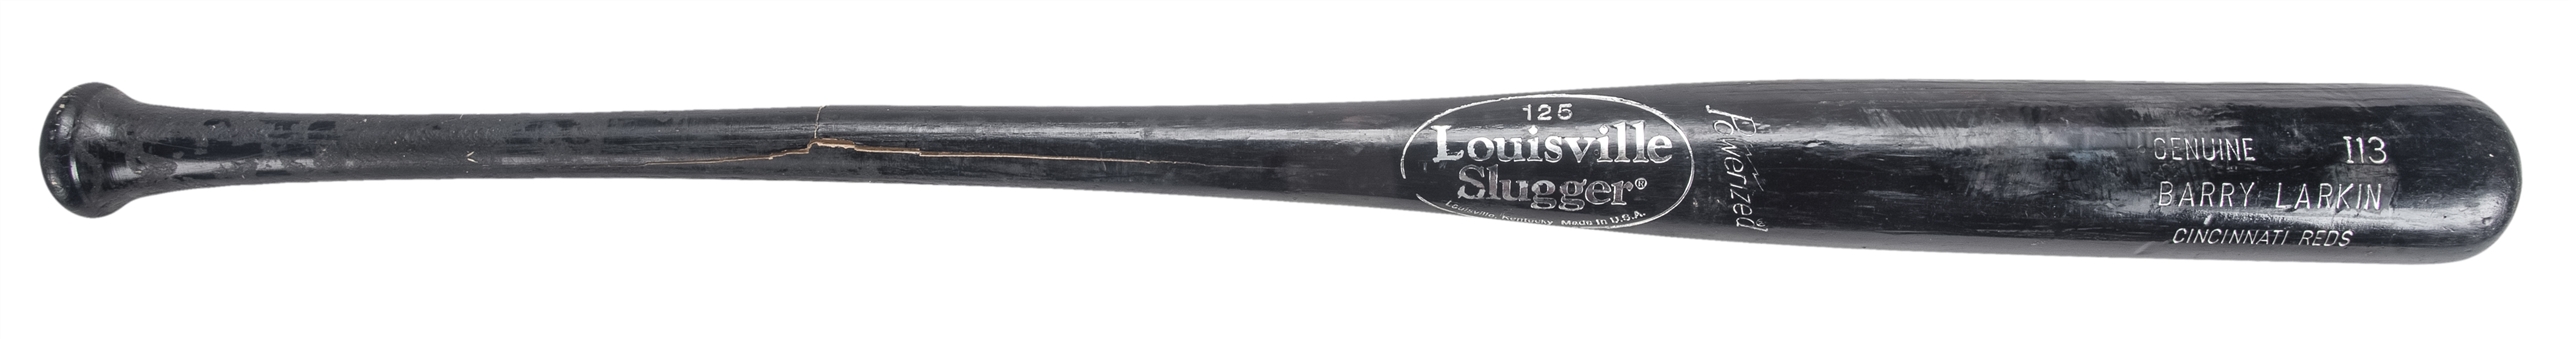 2002 Barry Larkin Cincinnati Reds Game Used Louisville Slugger I13 Model Bat (PSA/DNA GU 8.5)